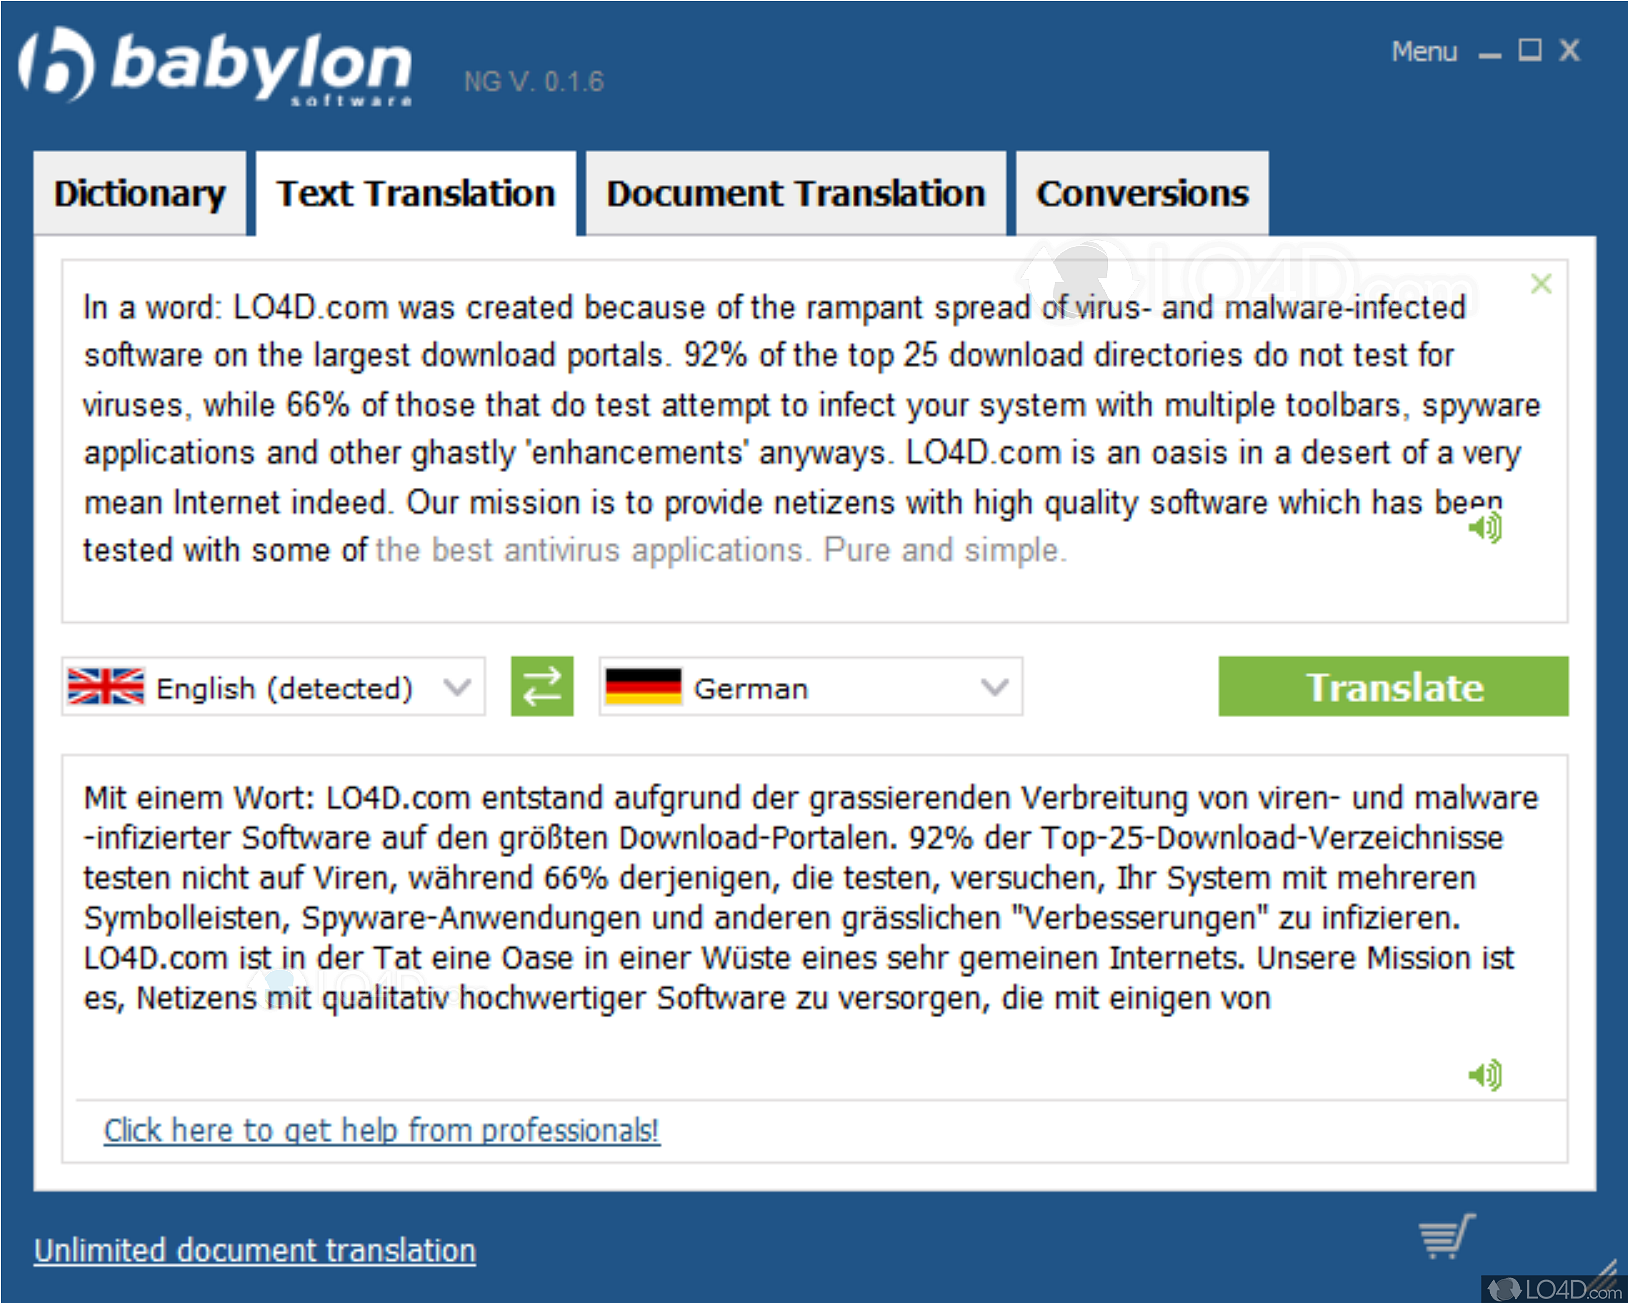 babylon dictionary 10